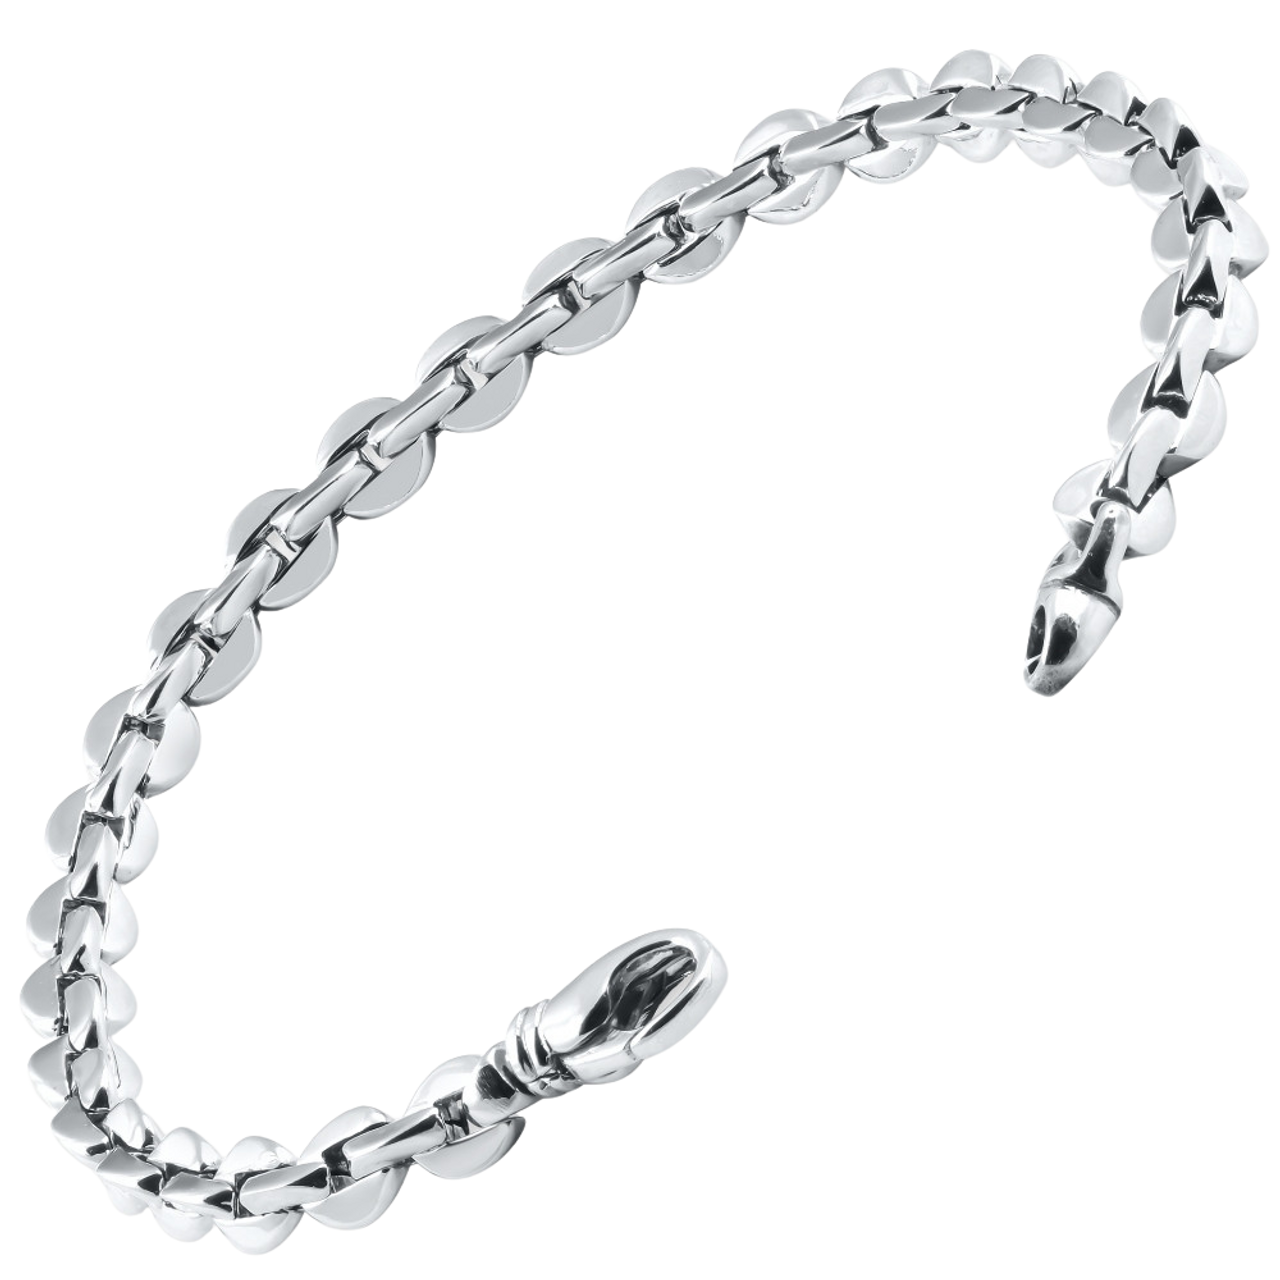 The diamond platinum bracelet | Mens chain bracelet, Mens jewelry bracelet,  Mens diamond bracelet